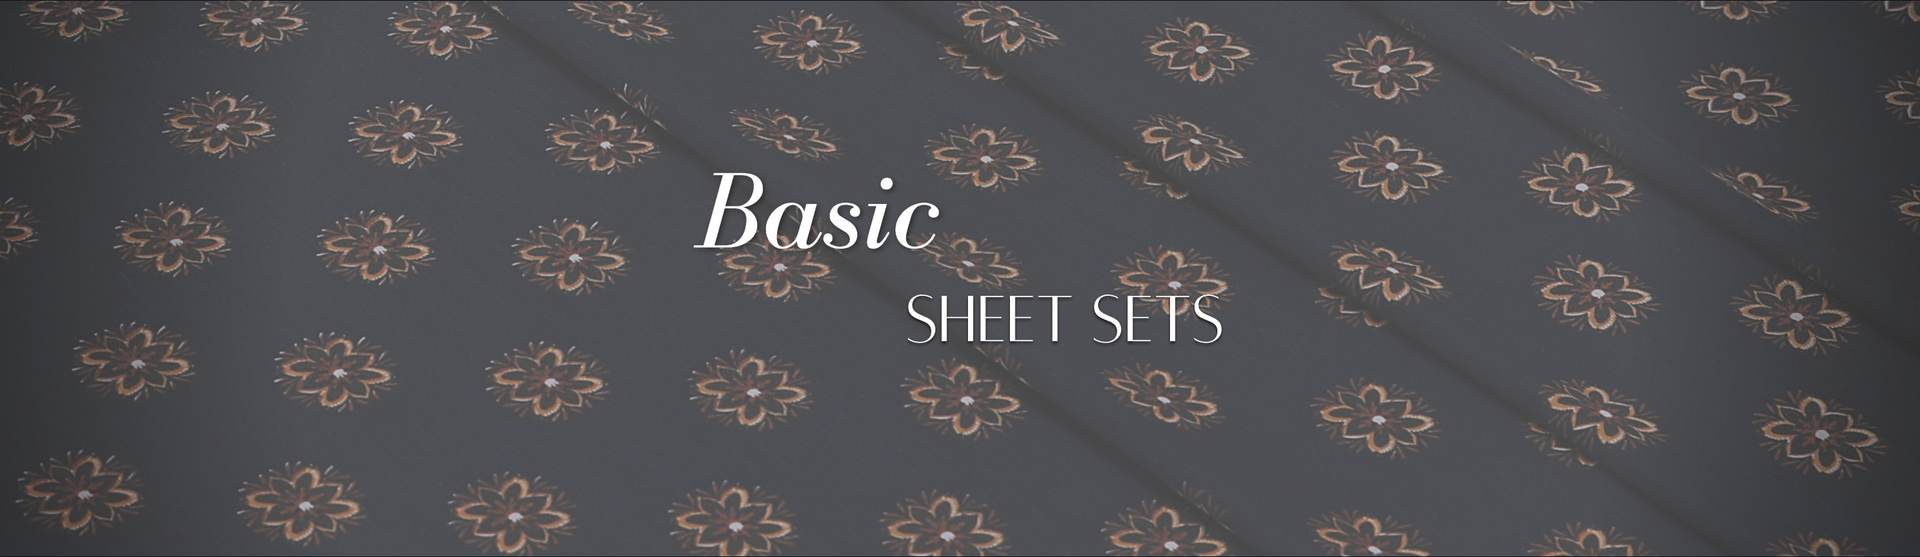 Bedding - Basic - Sheet Sets